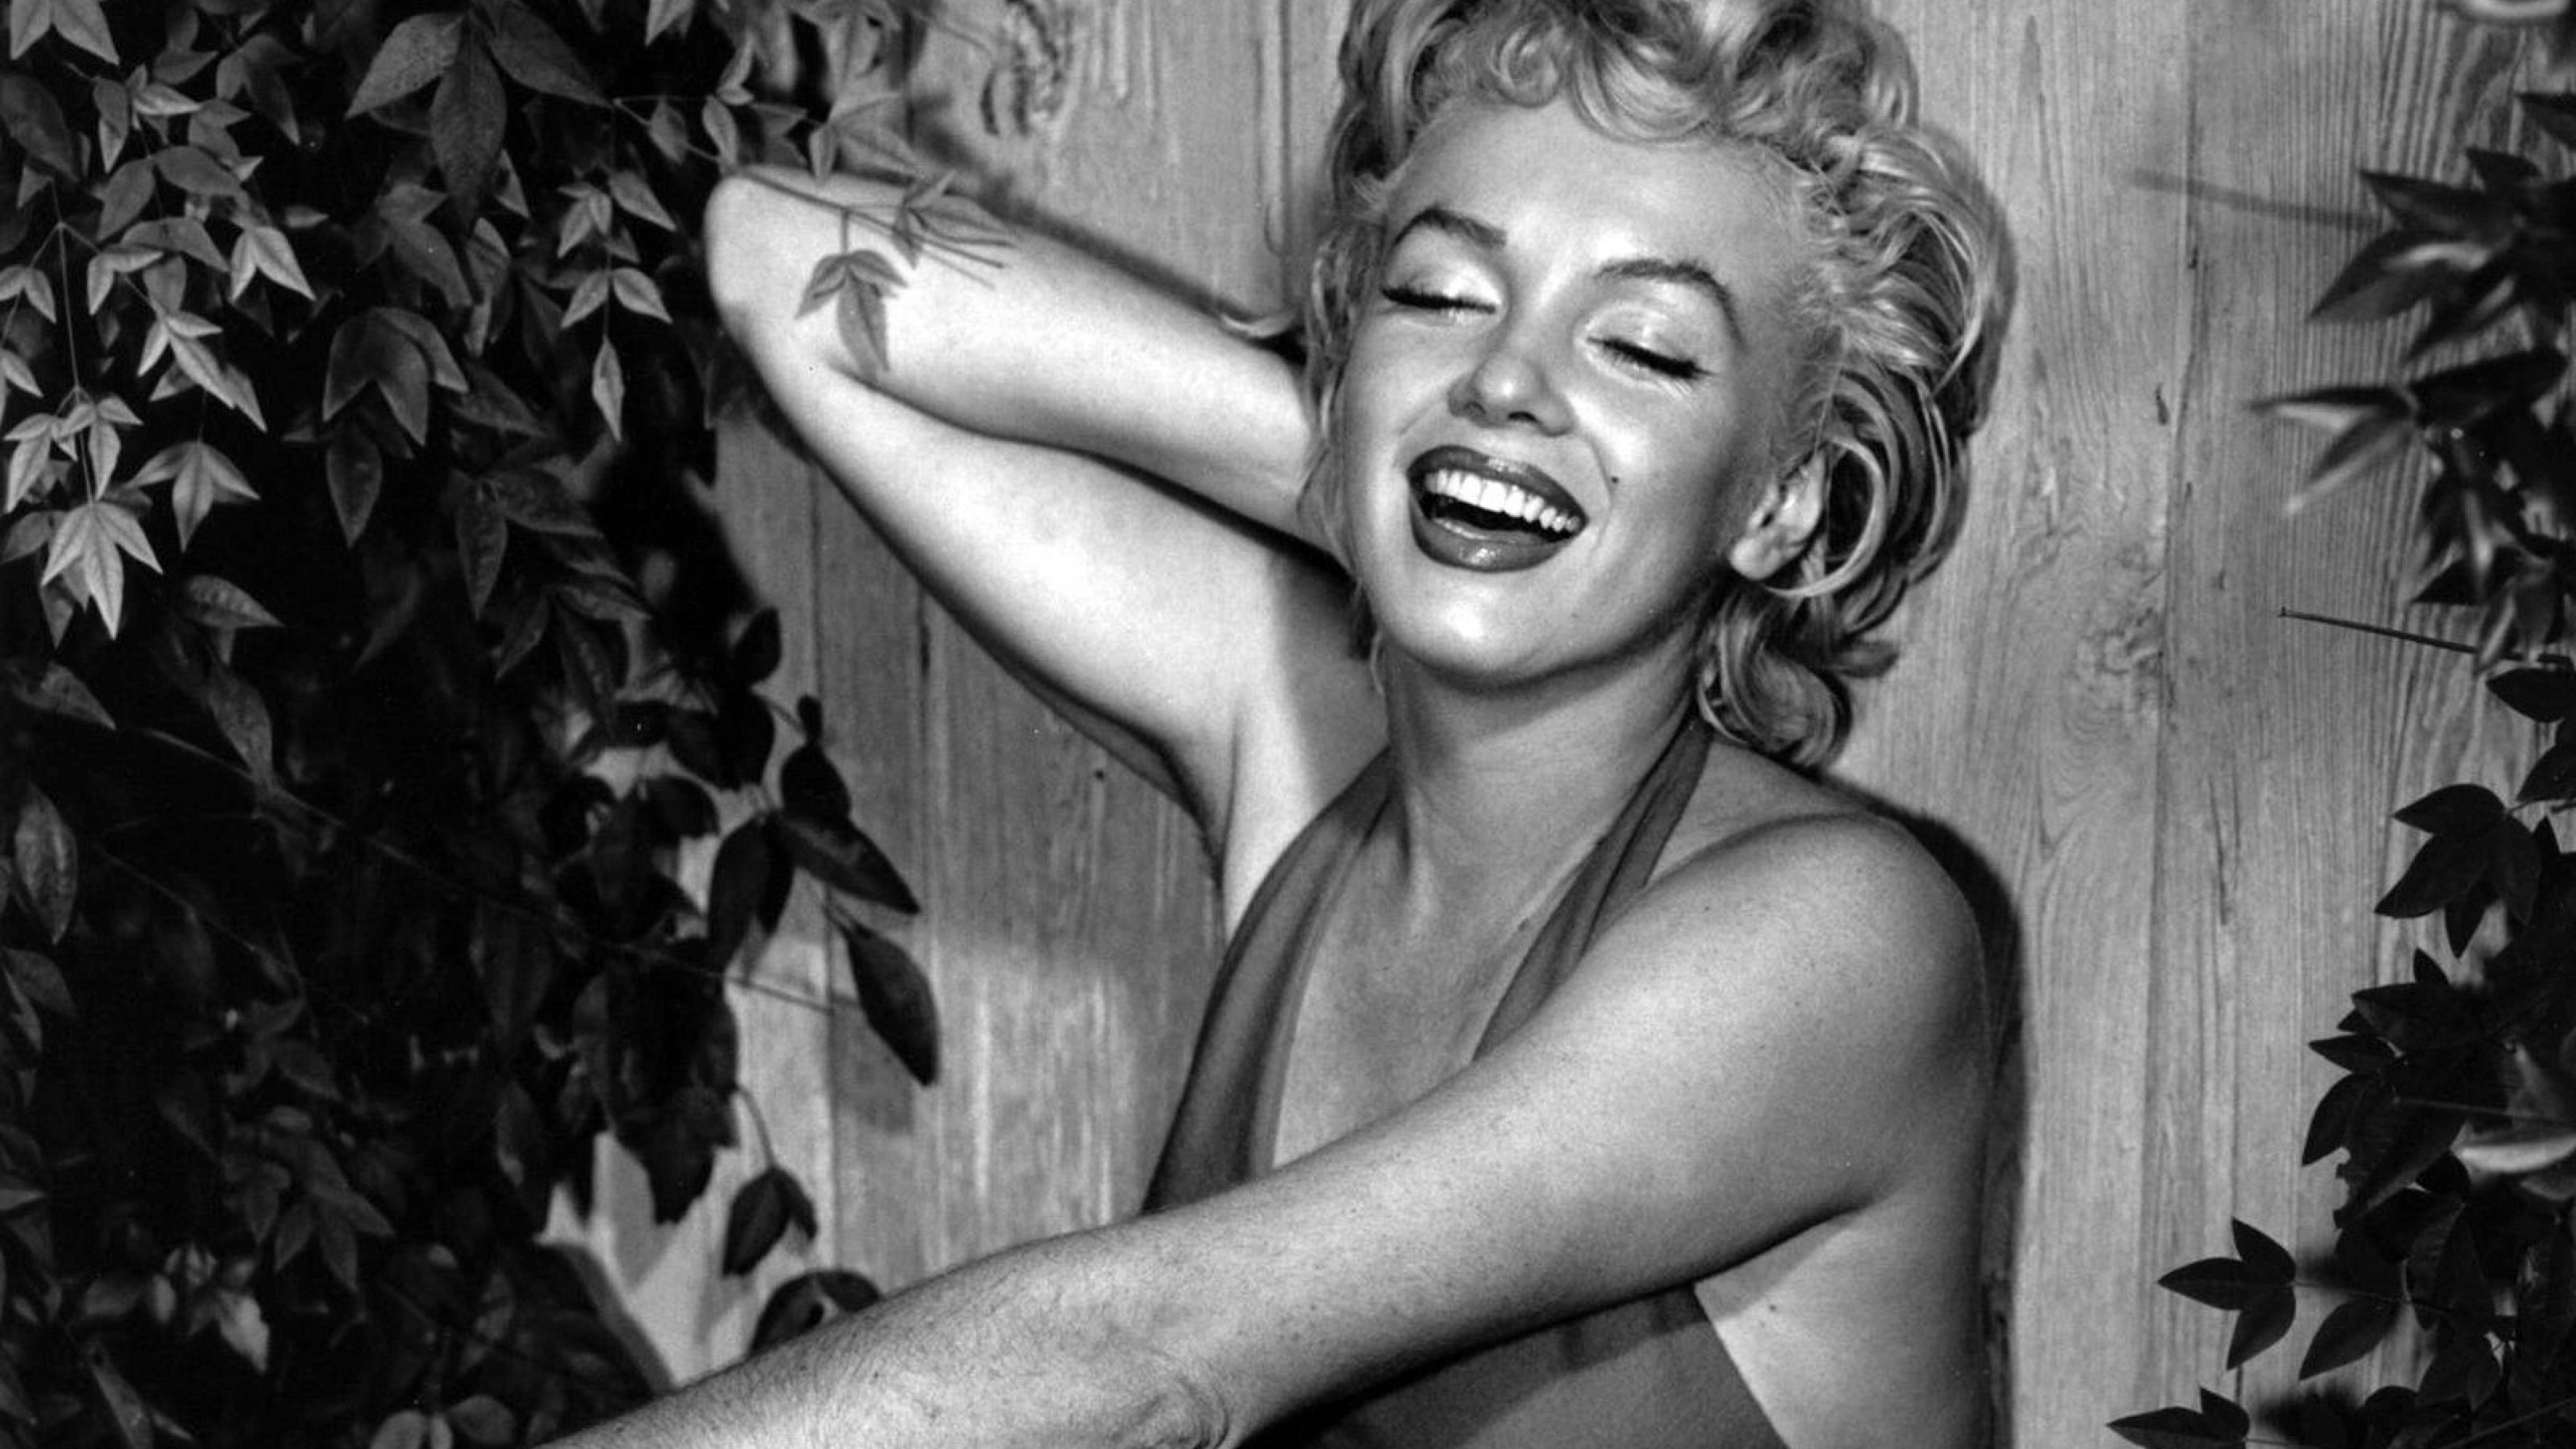 45+] Tattooed Marilyn Monroe Wallpaper - WallpaperSafari